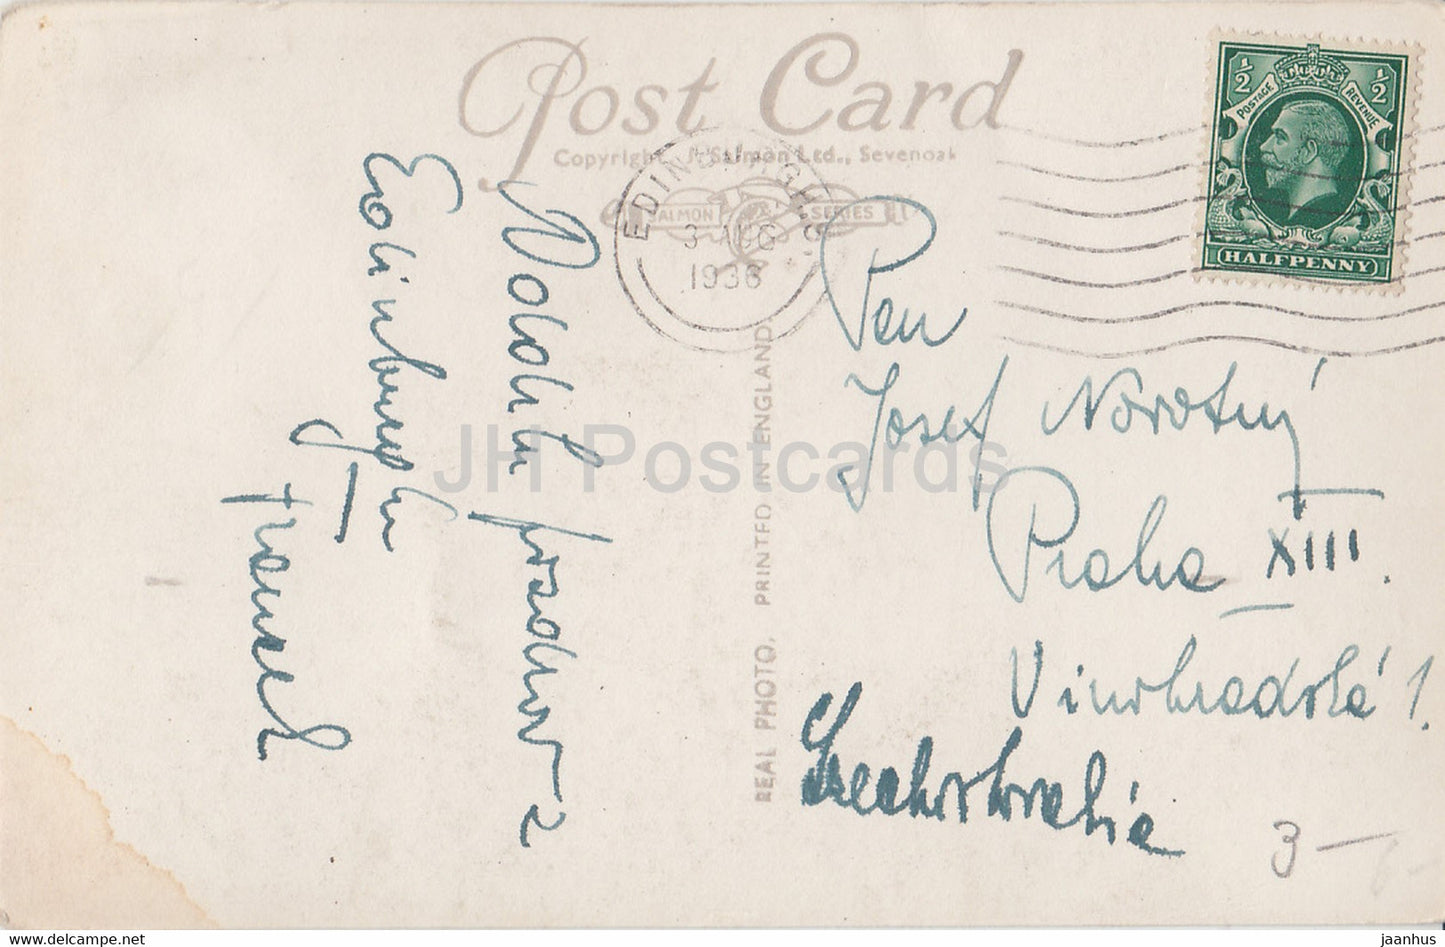 Edinburgh - St Giles Cathedral - 2096 - old postcard - 1936 - Scotland - United Kingdom - used